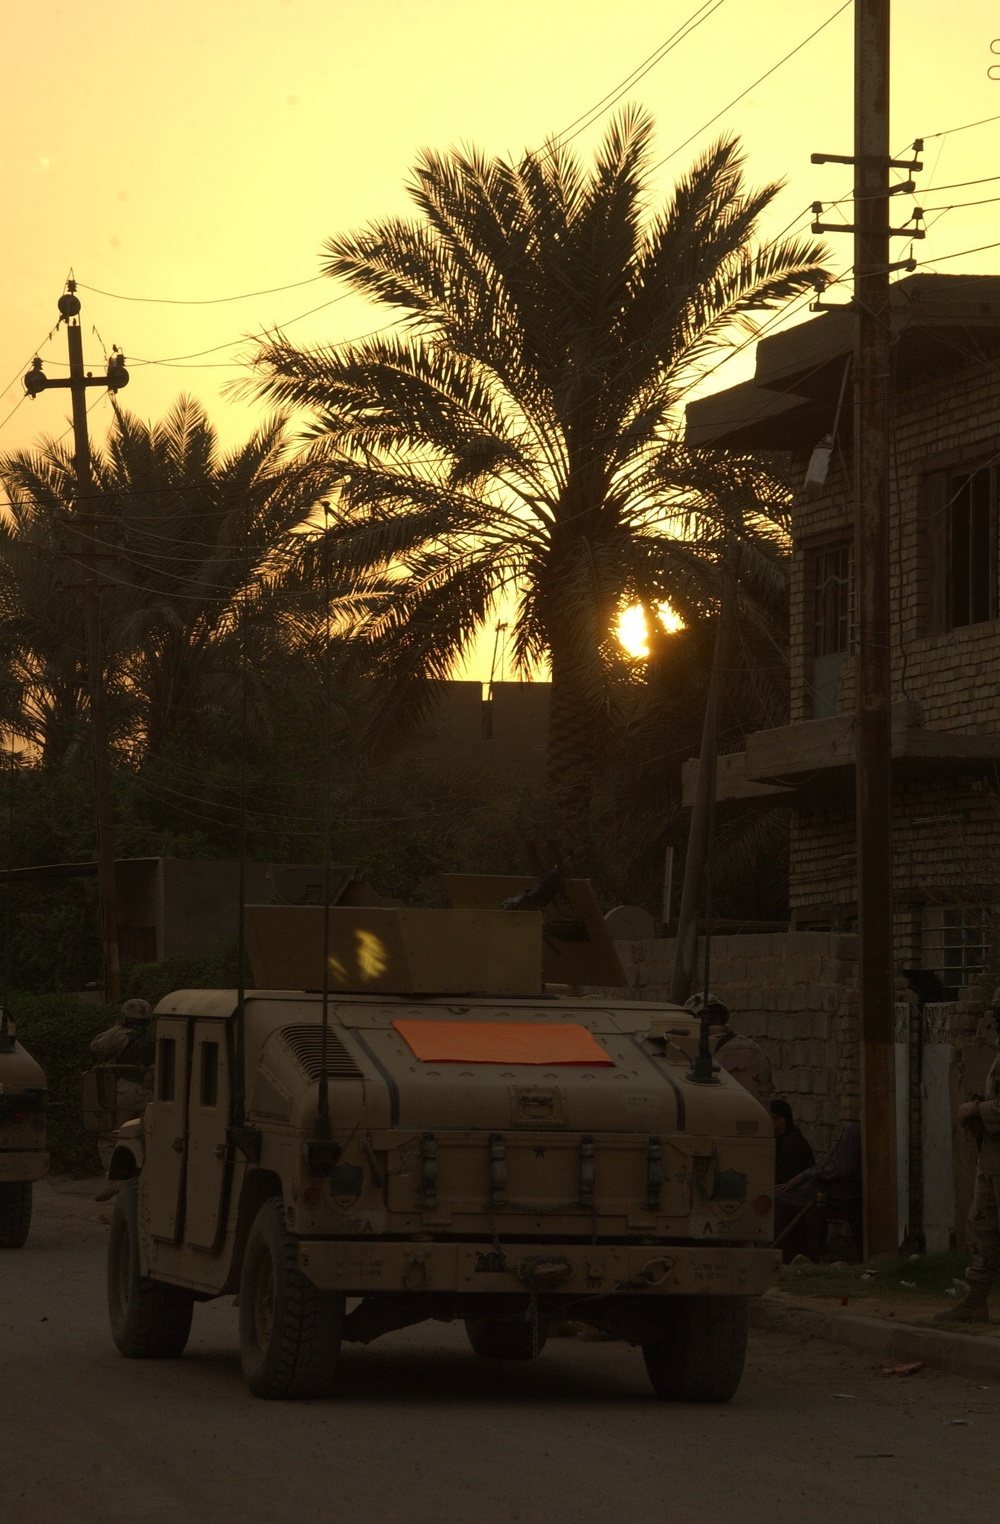 Iraqi Police, U.S. Soldiers Trap 5 Terror Suspects